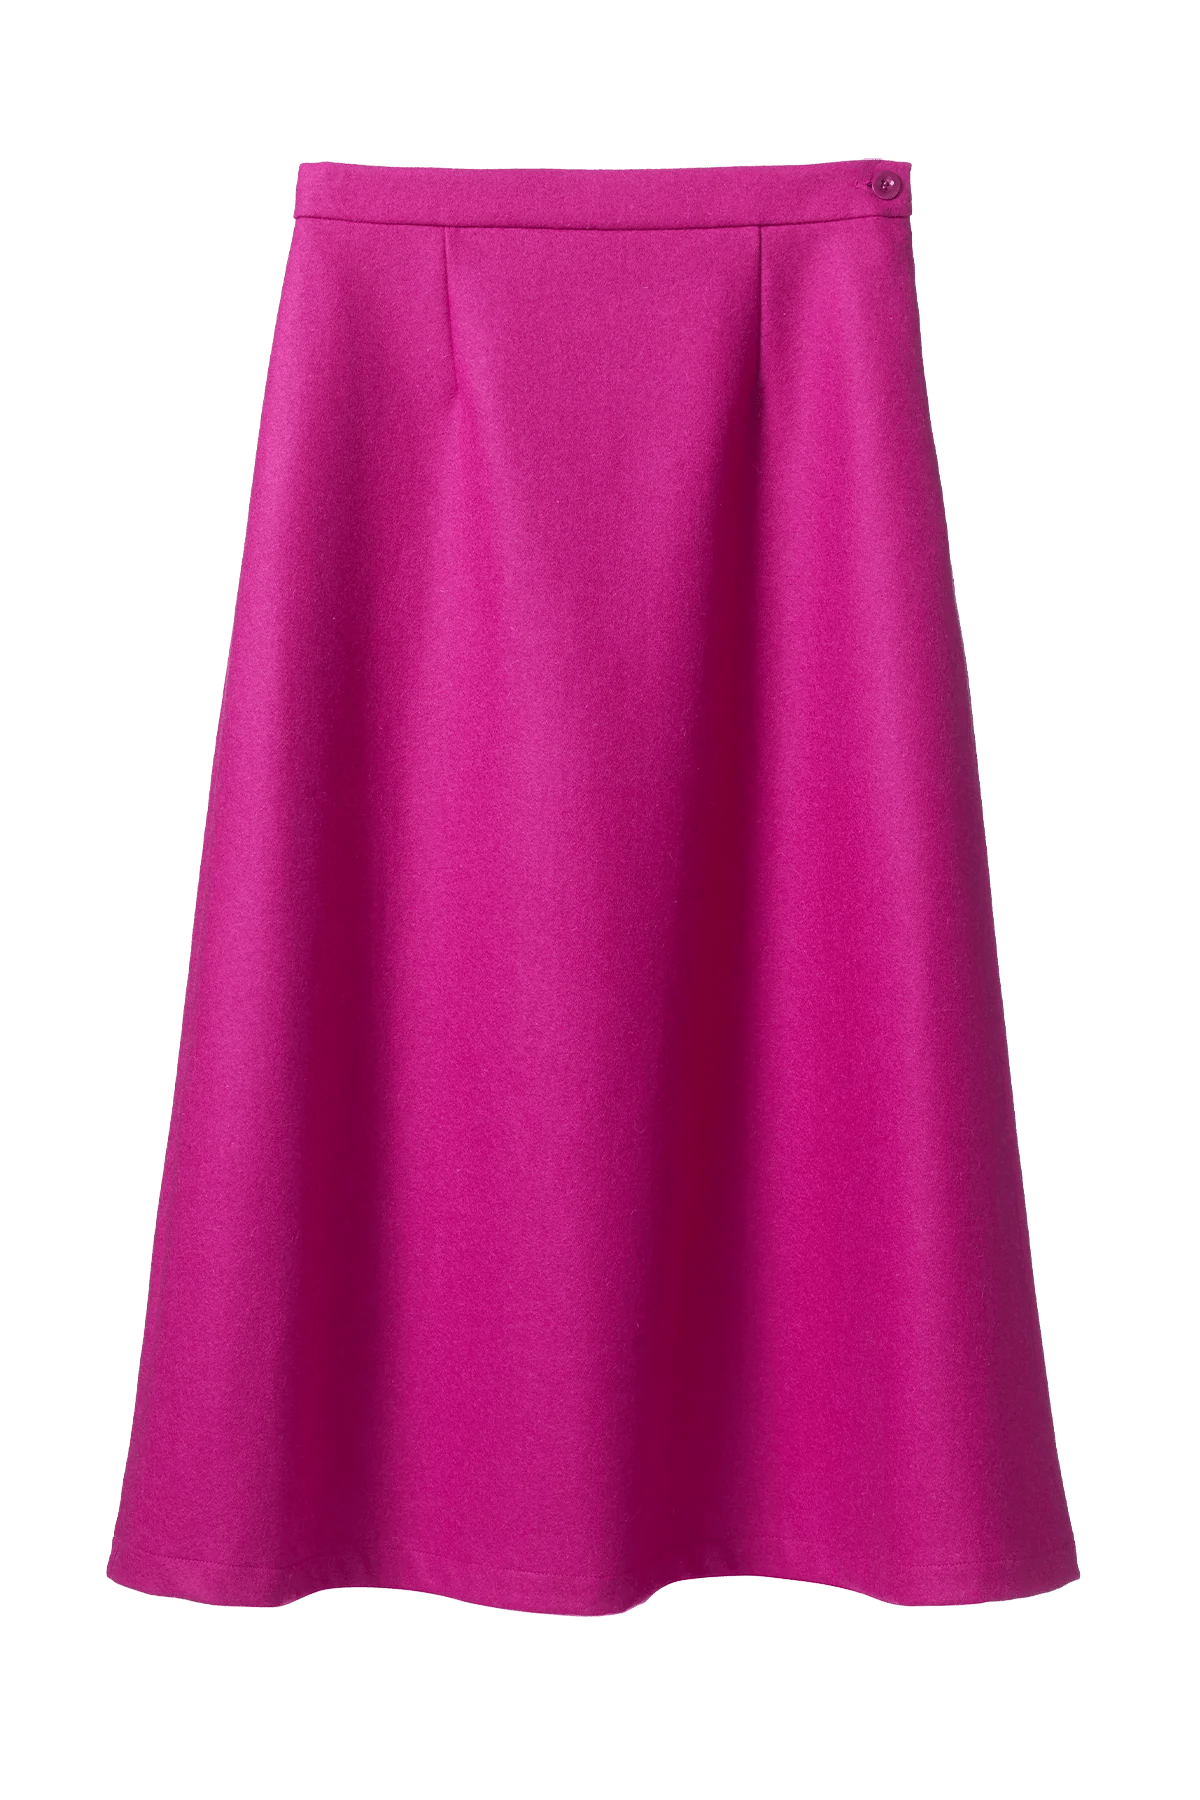 twenty-seven names | Ascension Skirt | Magenta | Palm Boutique